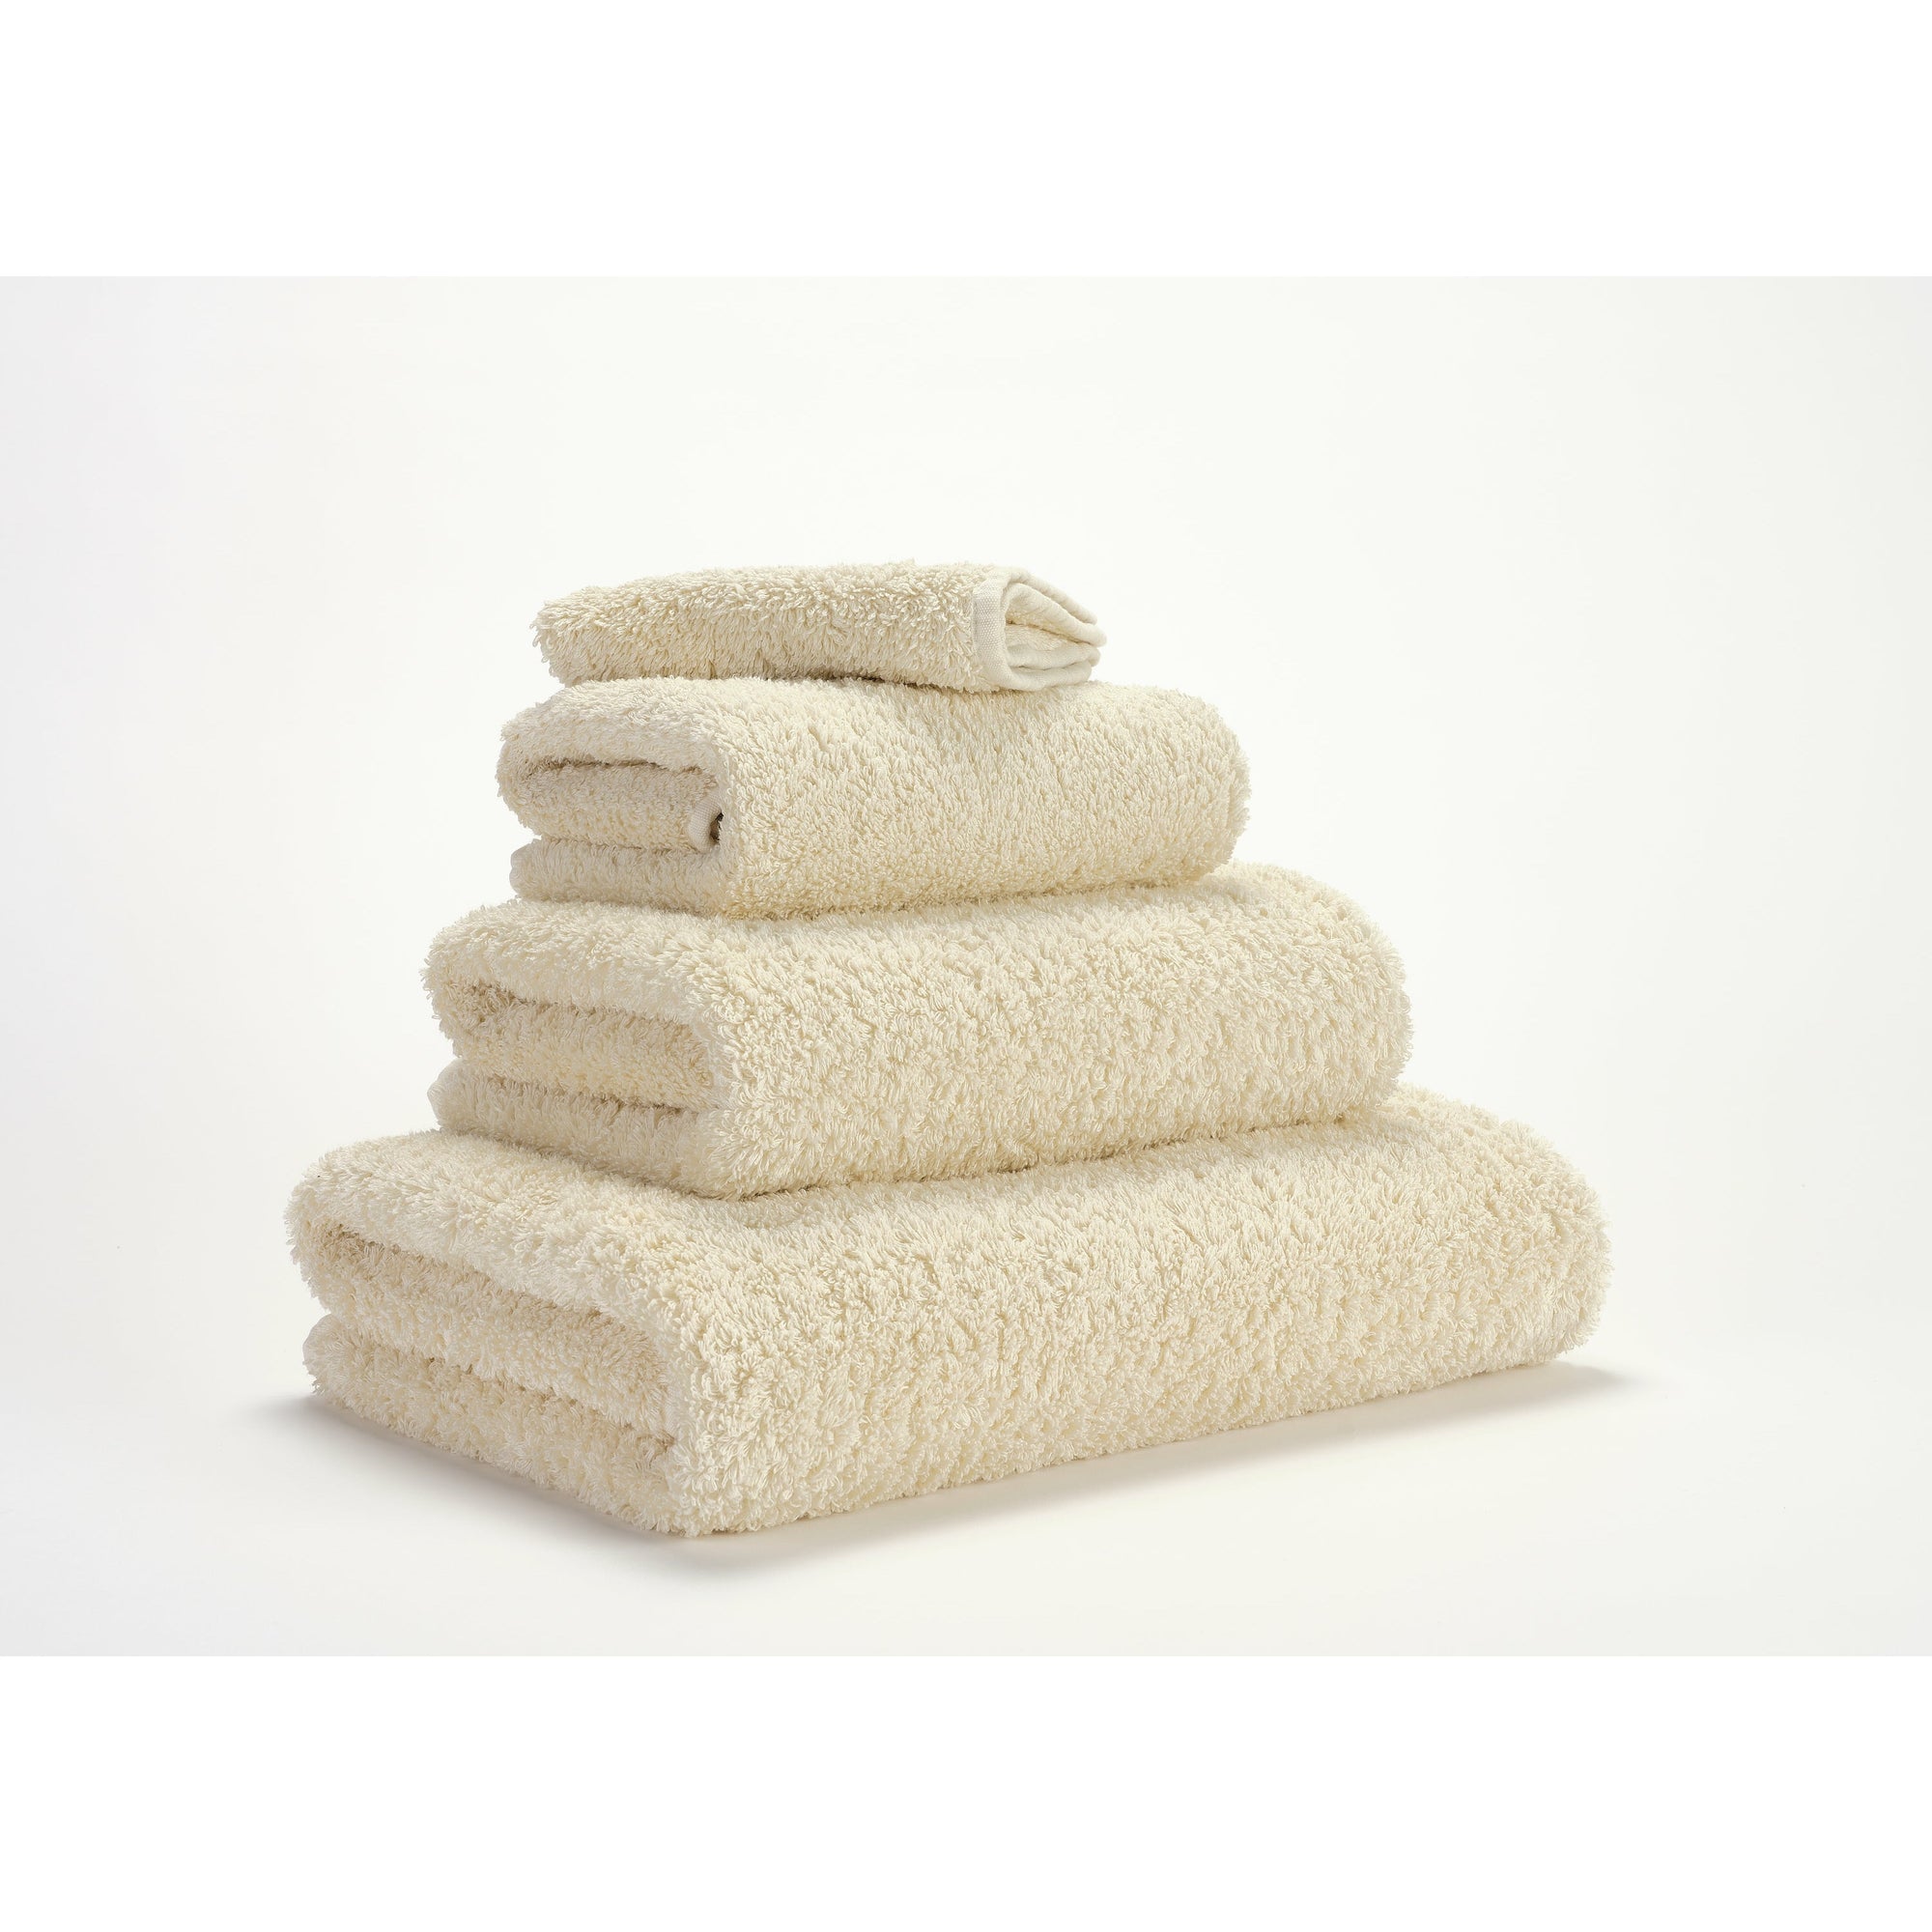 https://cdn.shopify.com/s/files/1/0497/1809/products/Abyss-Super-Pile-Bath-Towels-Portugal-Ecru_2000x.jpg?v=1634105408